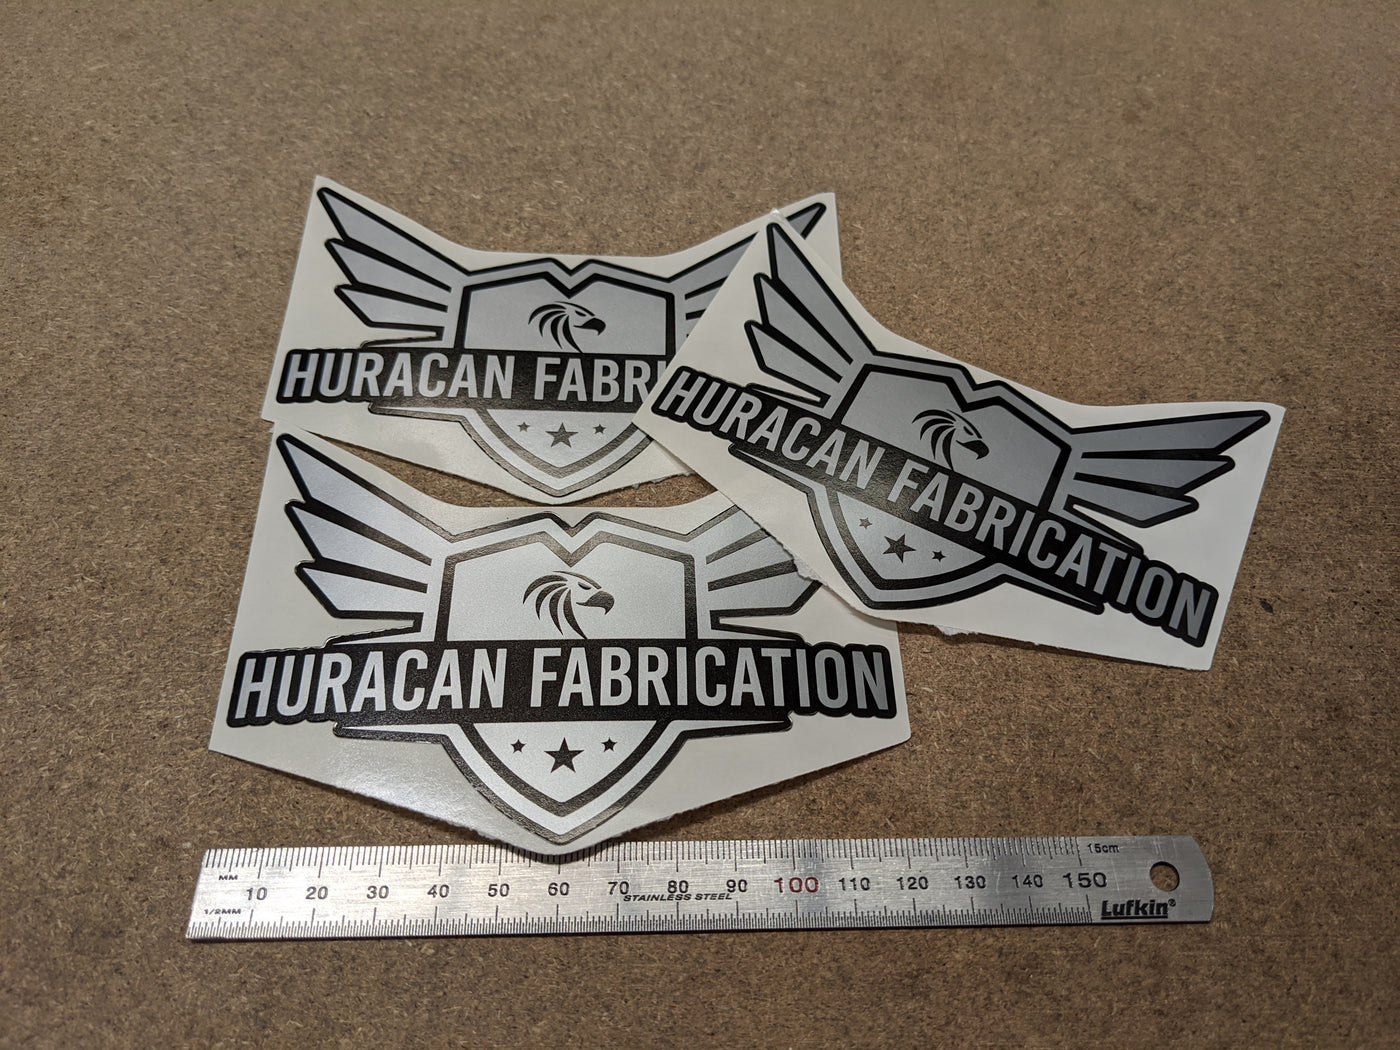 Huracan Fabrication stickers